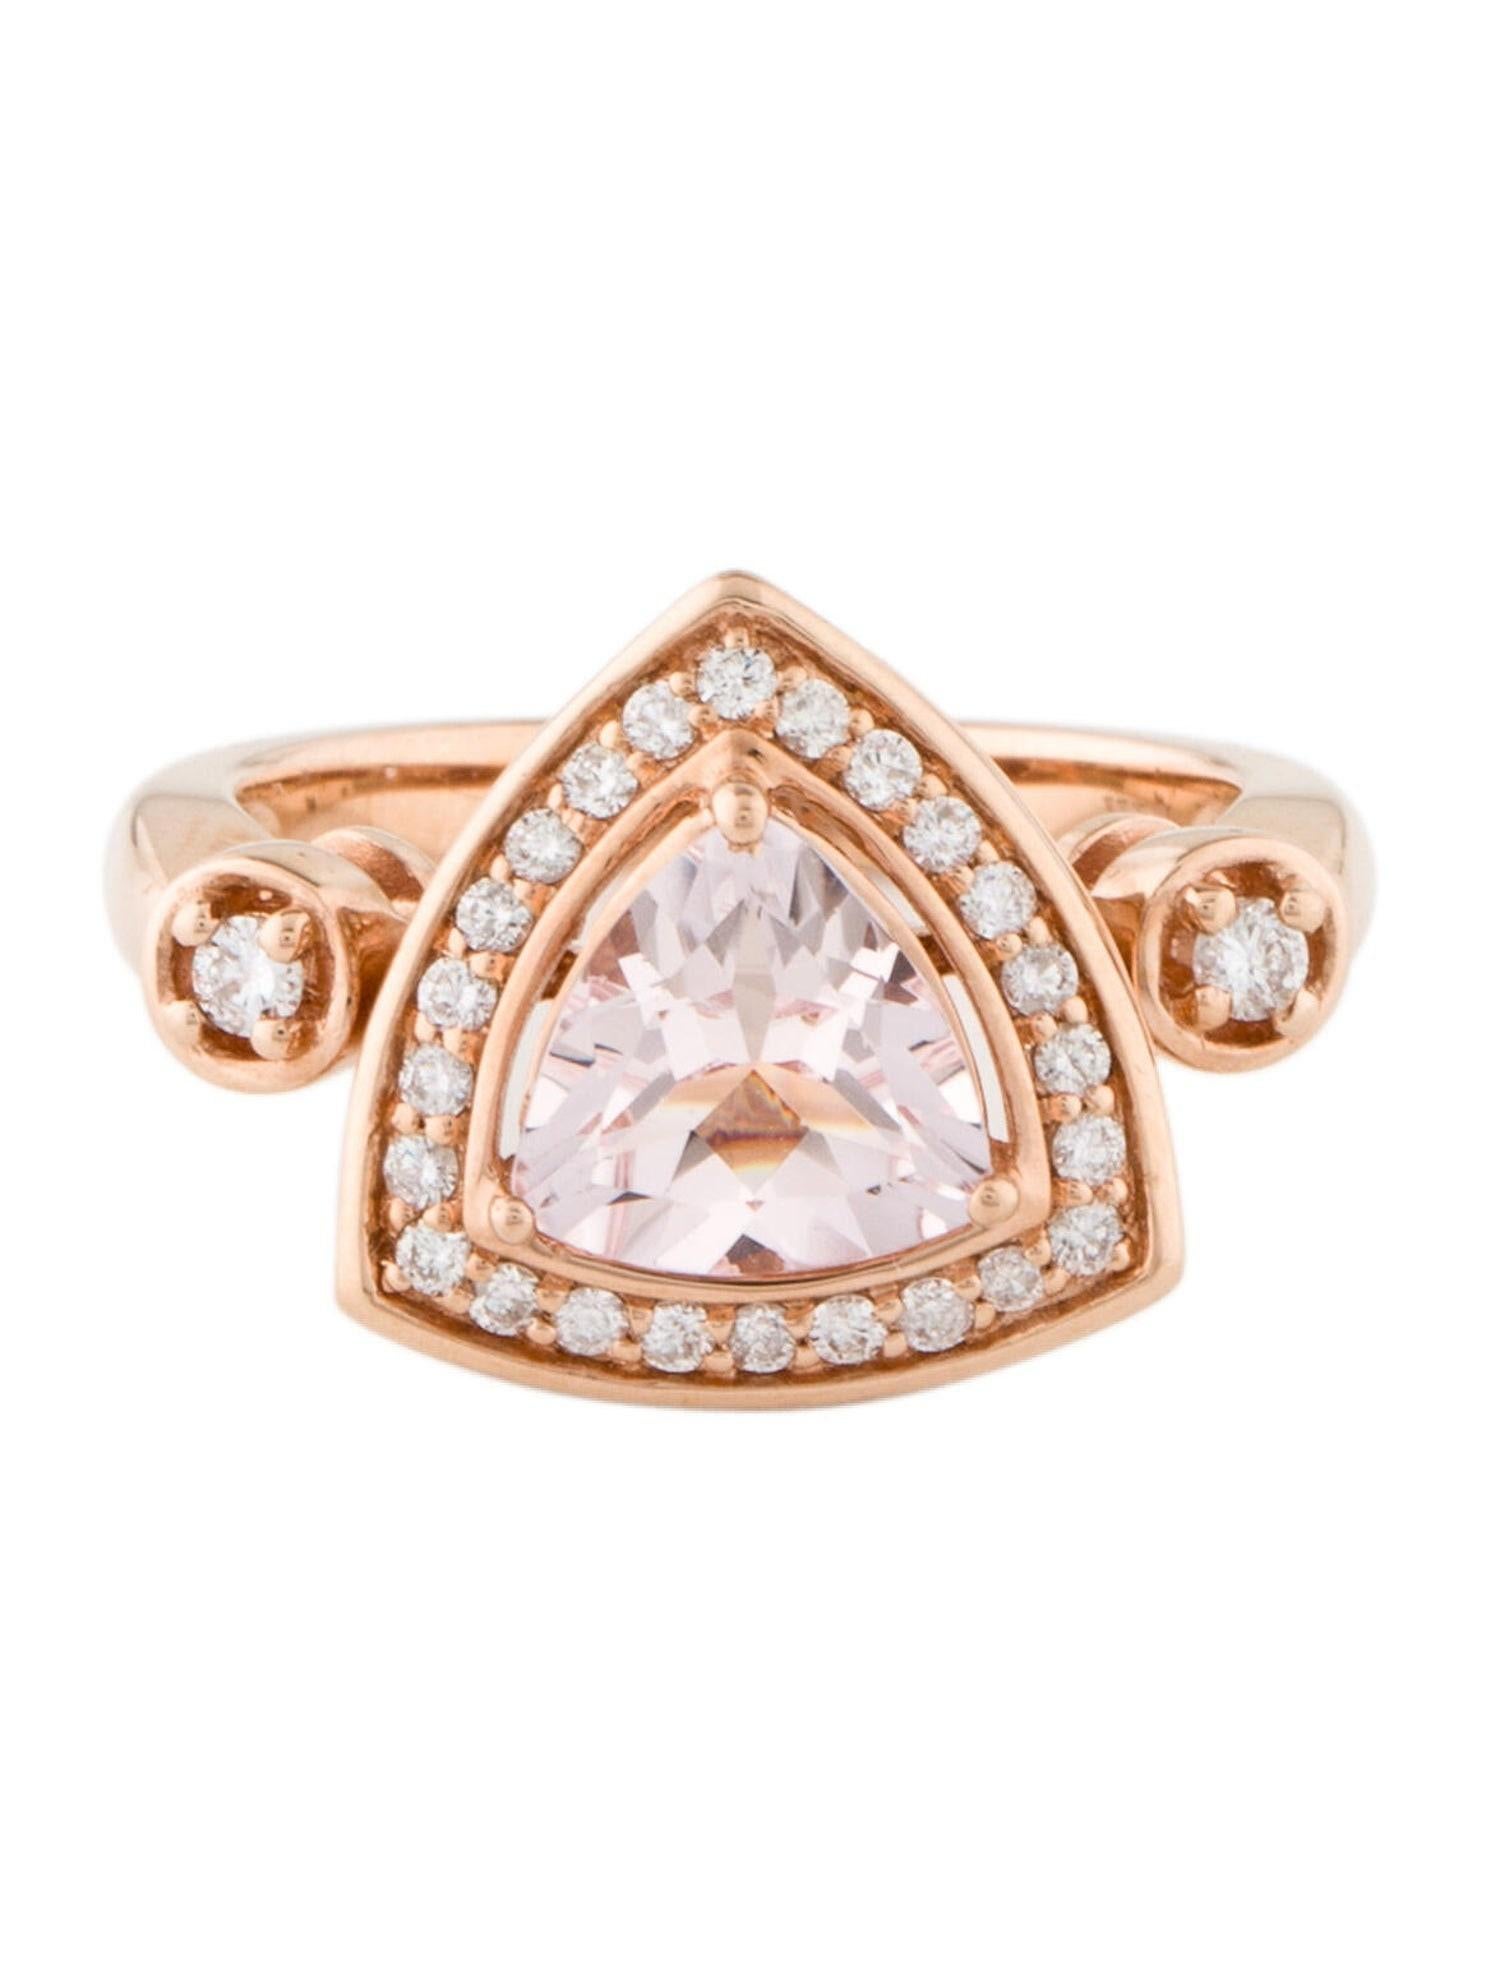 Contemporary 14k Diamond & 1.29ct Morganite Trillion Cut Cocktail Ring For Sale